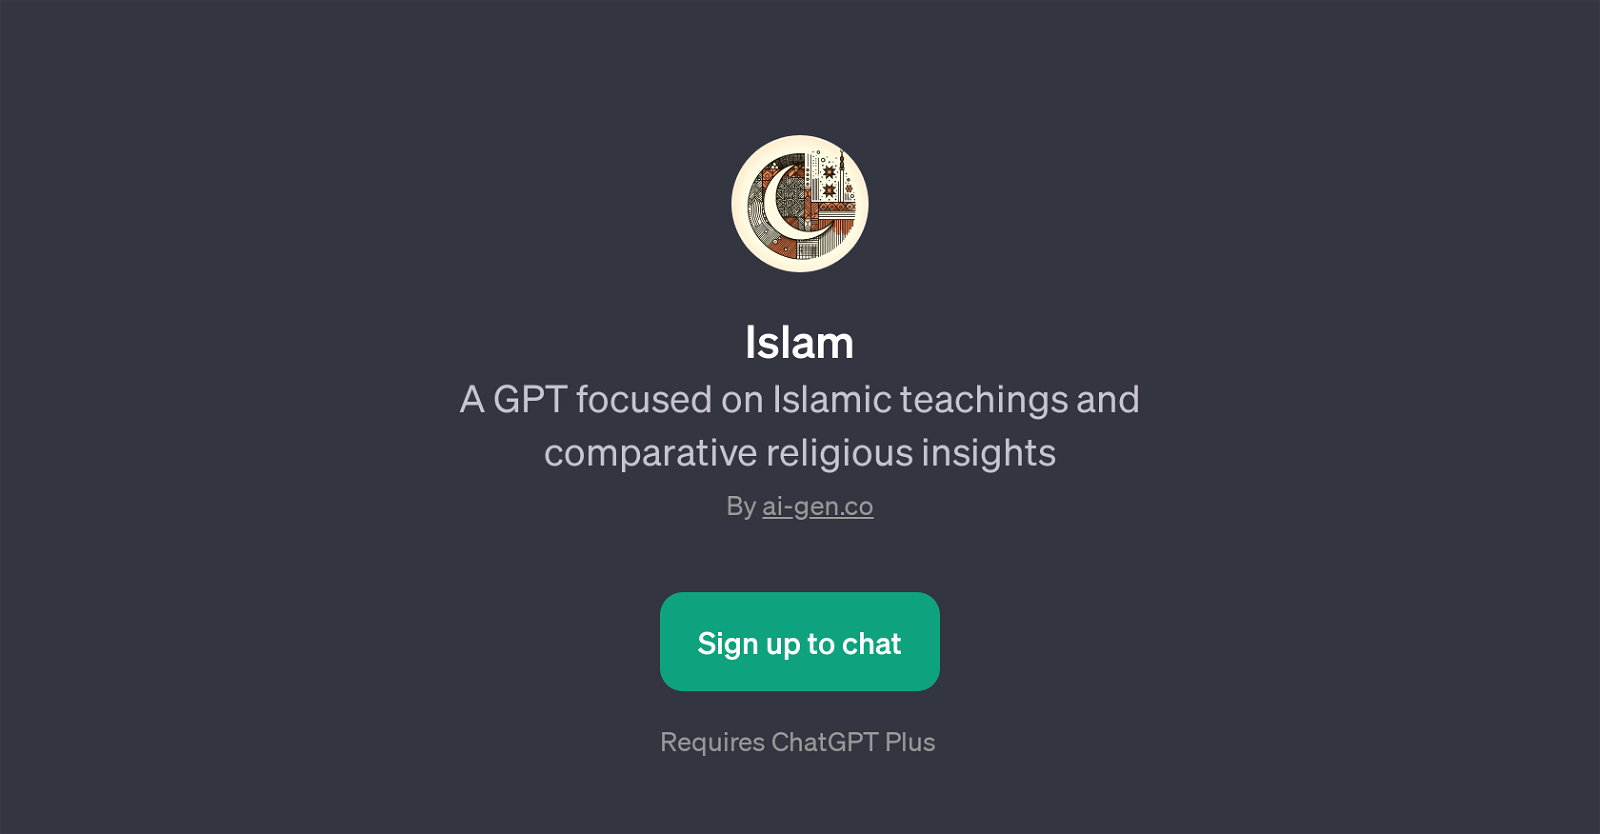 Islam website